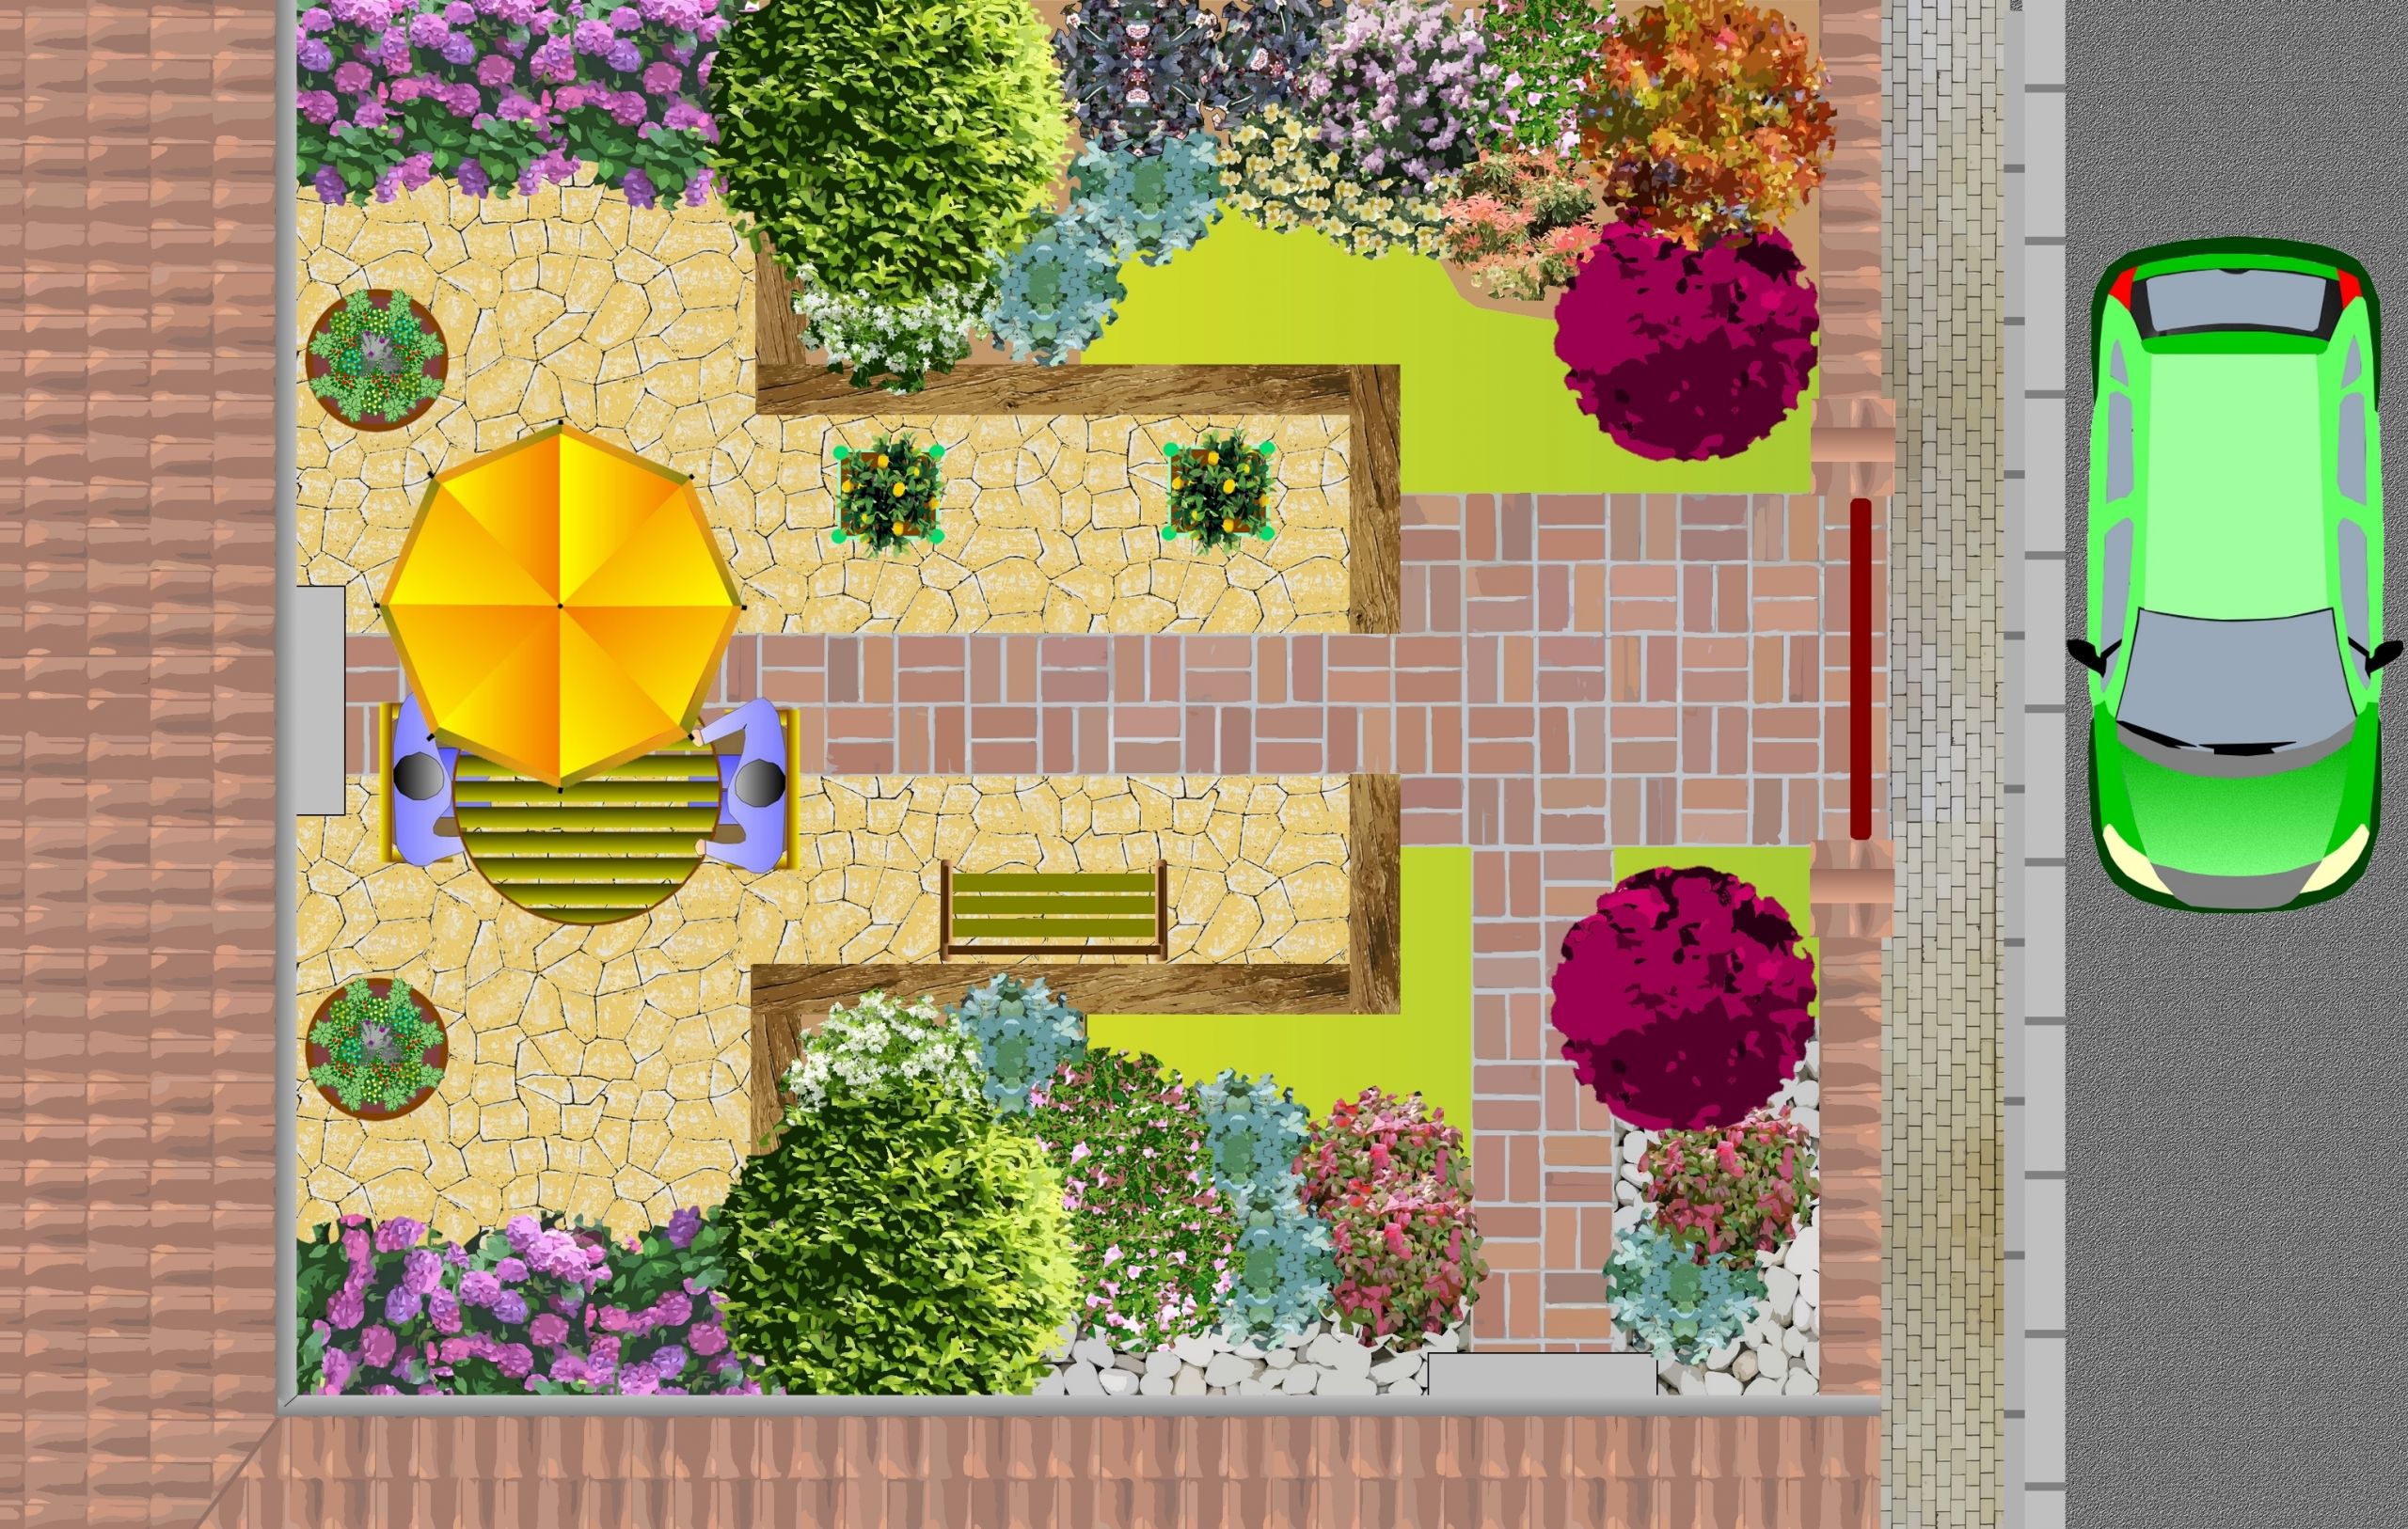 jardin paysager exemple exemple plan jardin modele d amenagement paysage page of jardin paysager exemple 2 scaled